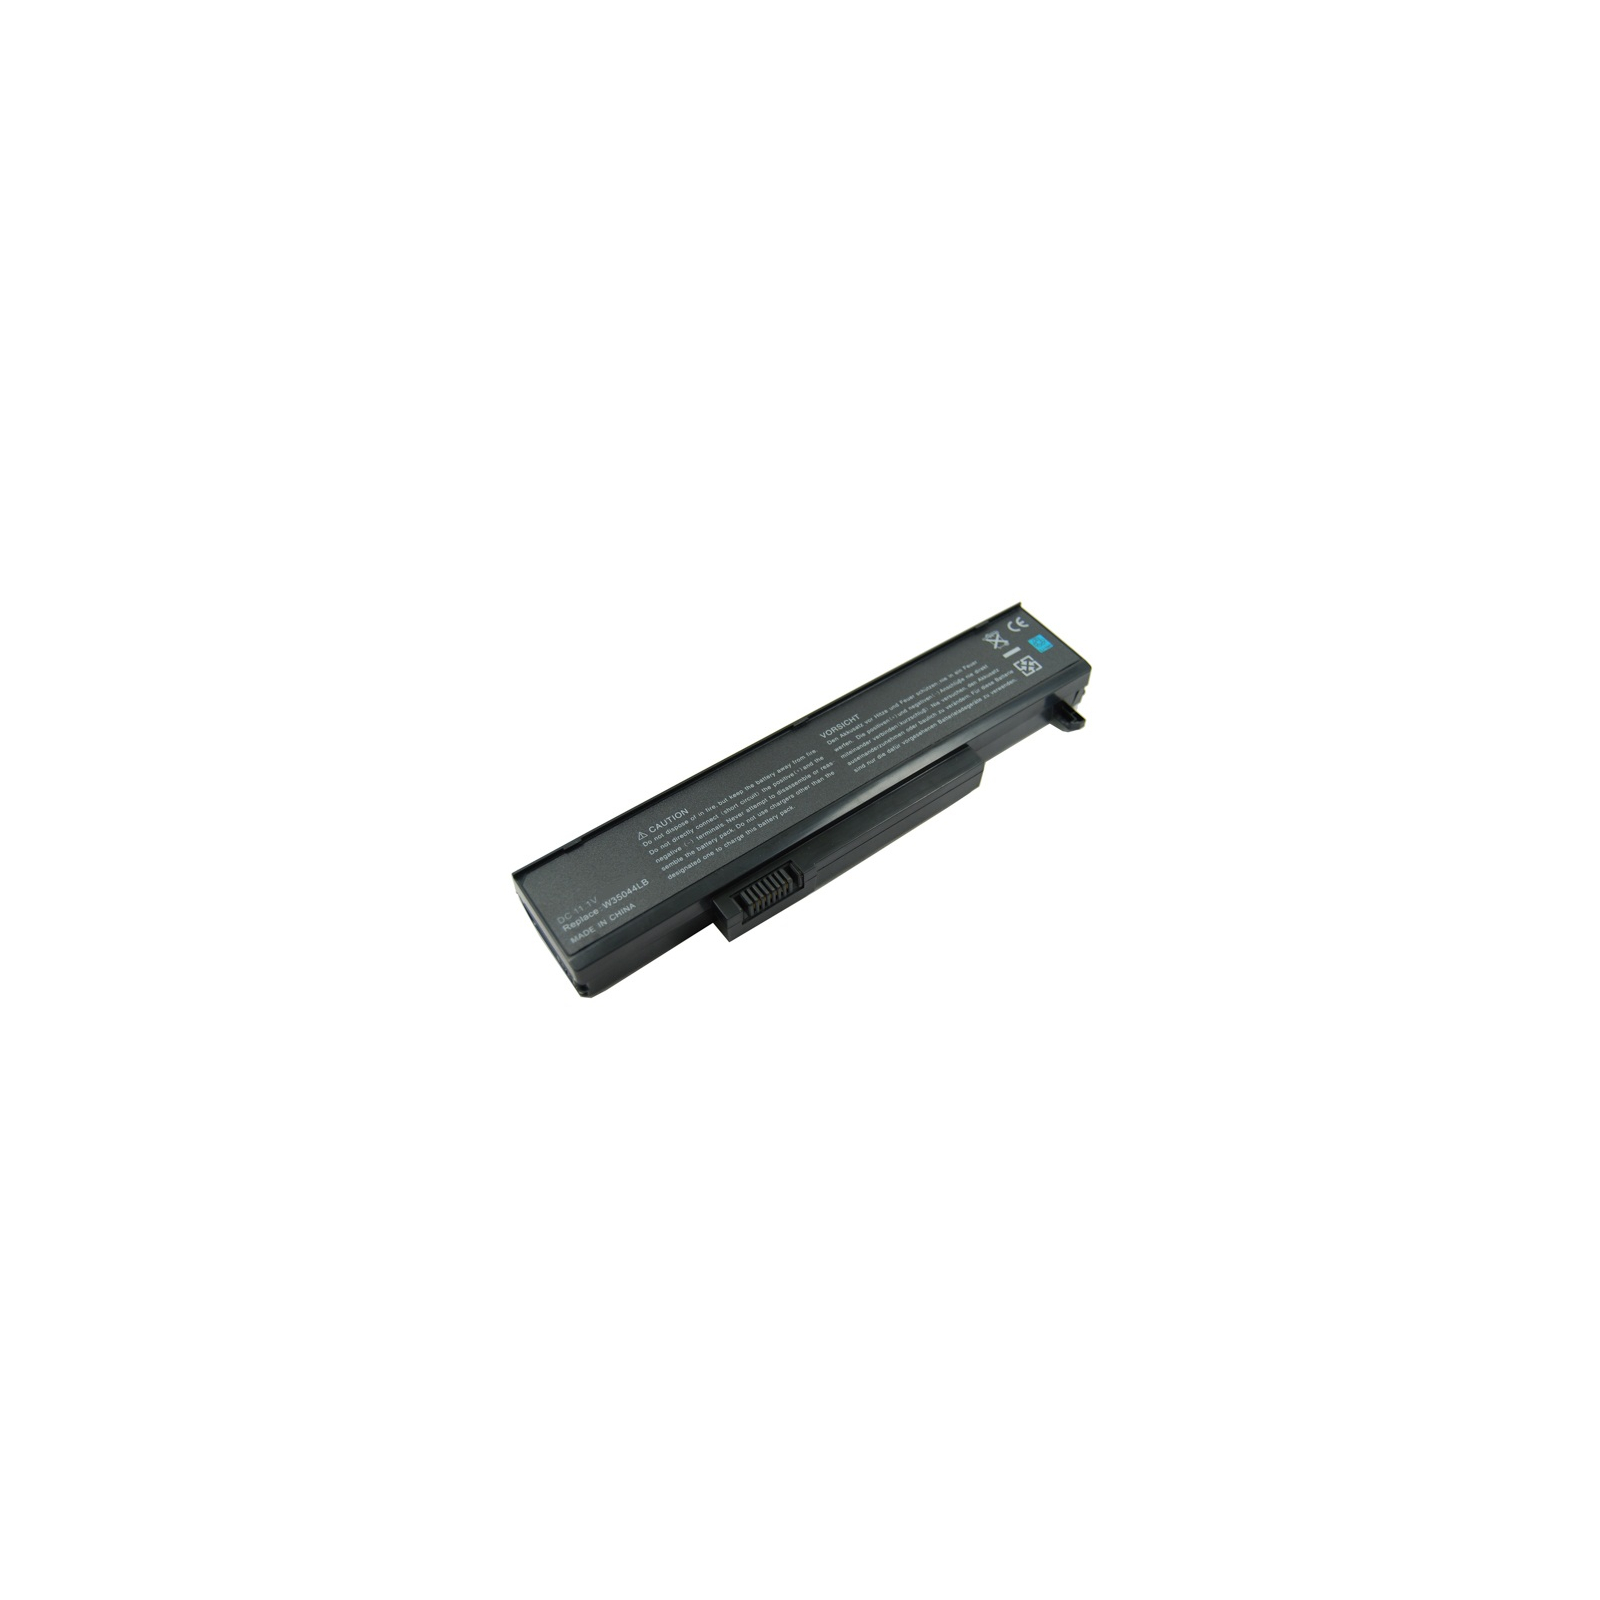 Аккумулятор для ноутбука GATEWAY M-150 (SQU-715, GY4044LH) 11.1V 5200mAh PowerPlant (NB00000120)